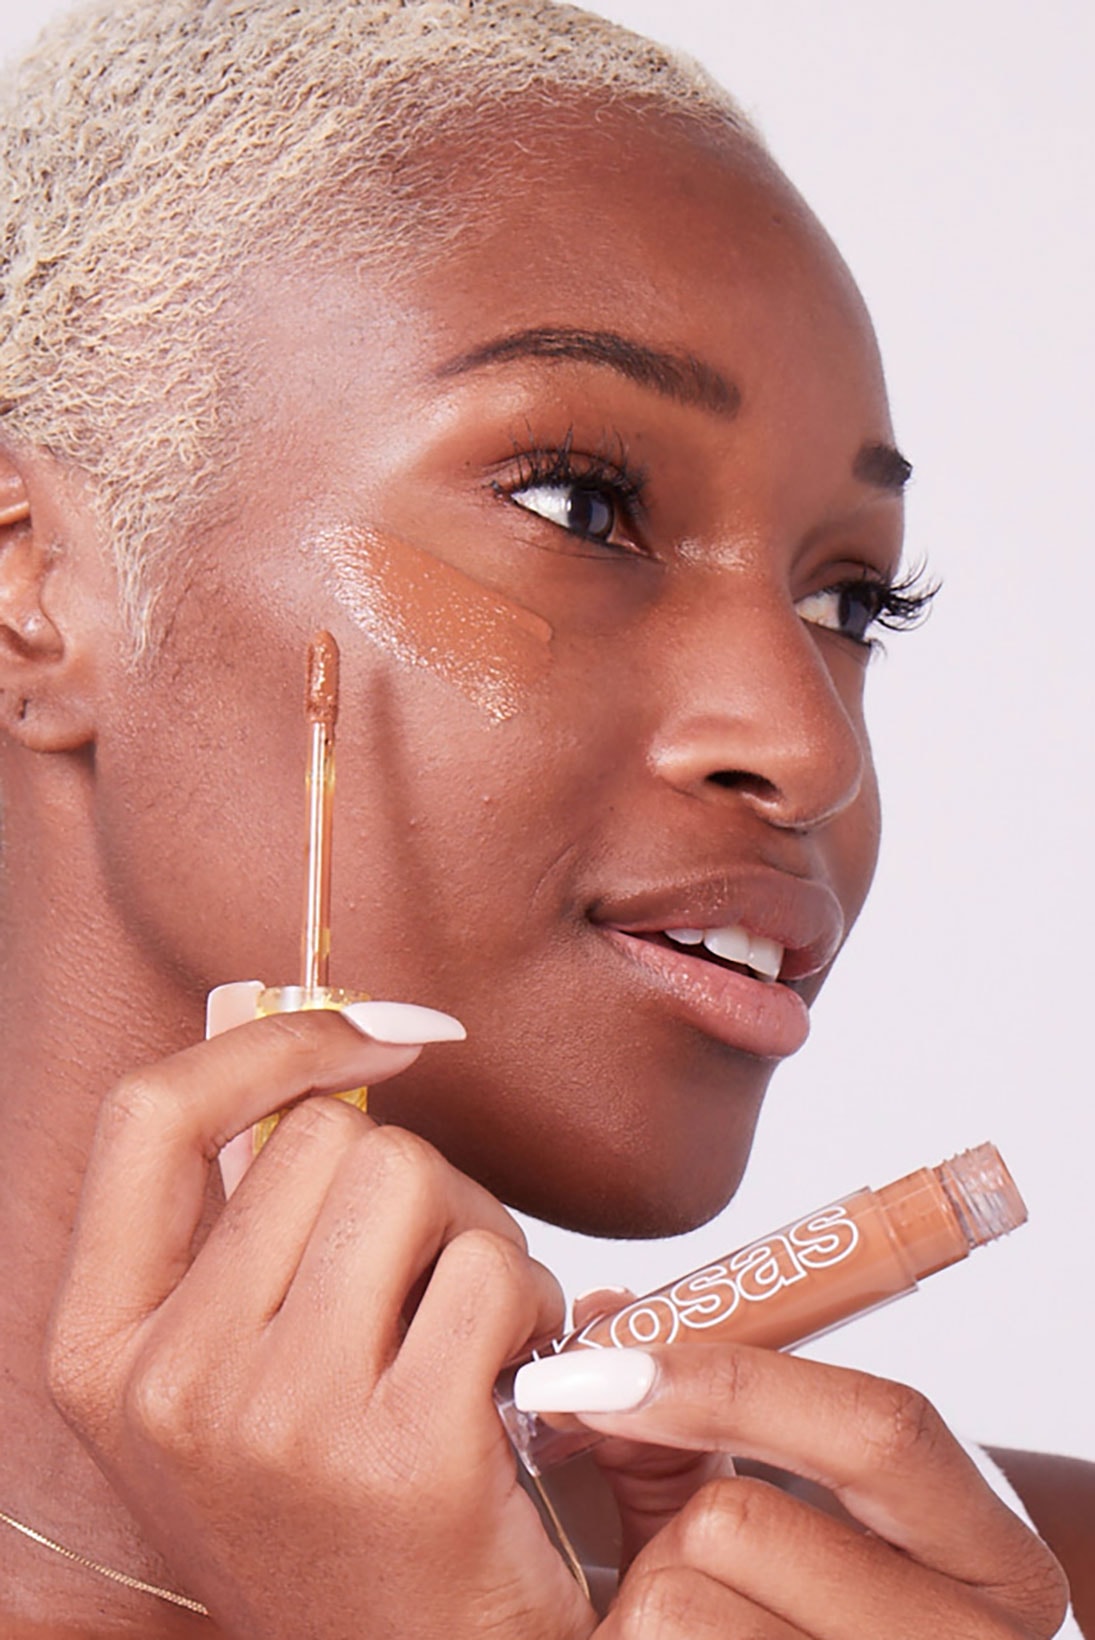 kosas revealer super cream brightening concealer skincare makeup clean beauty